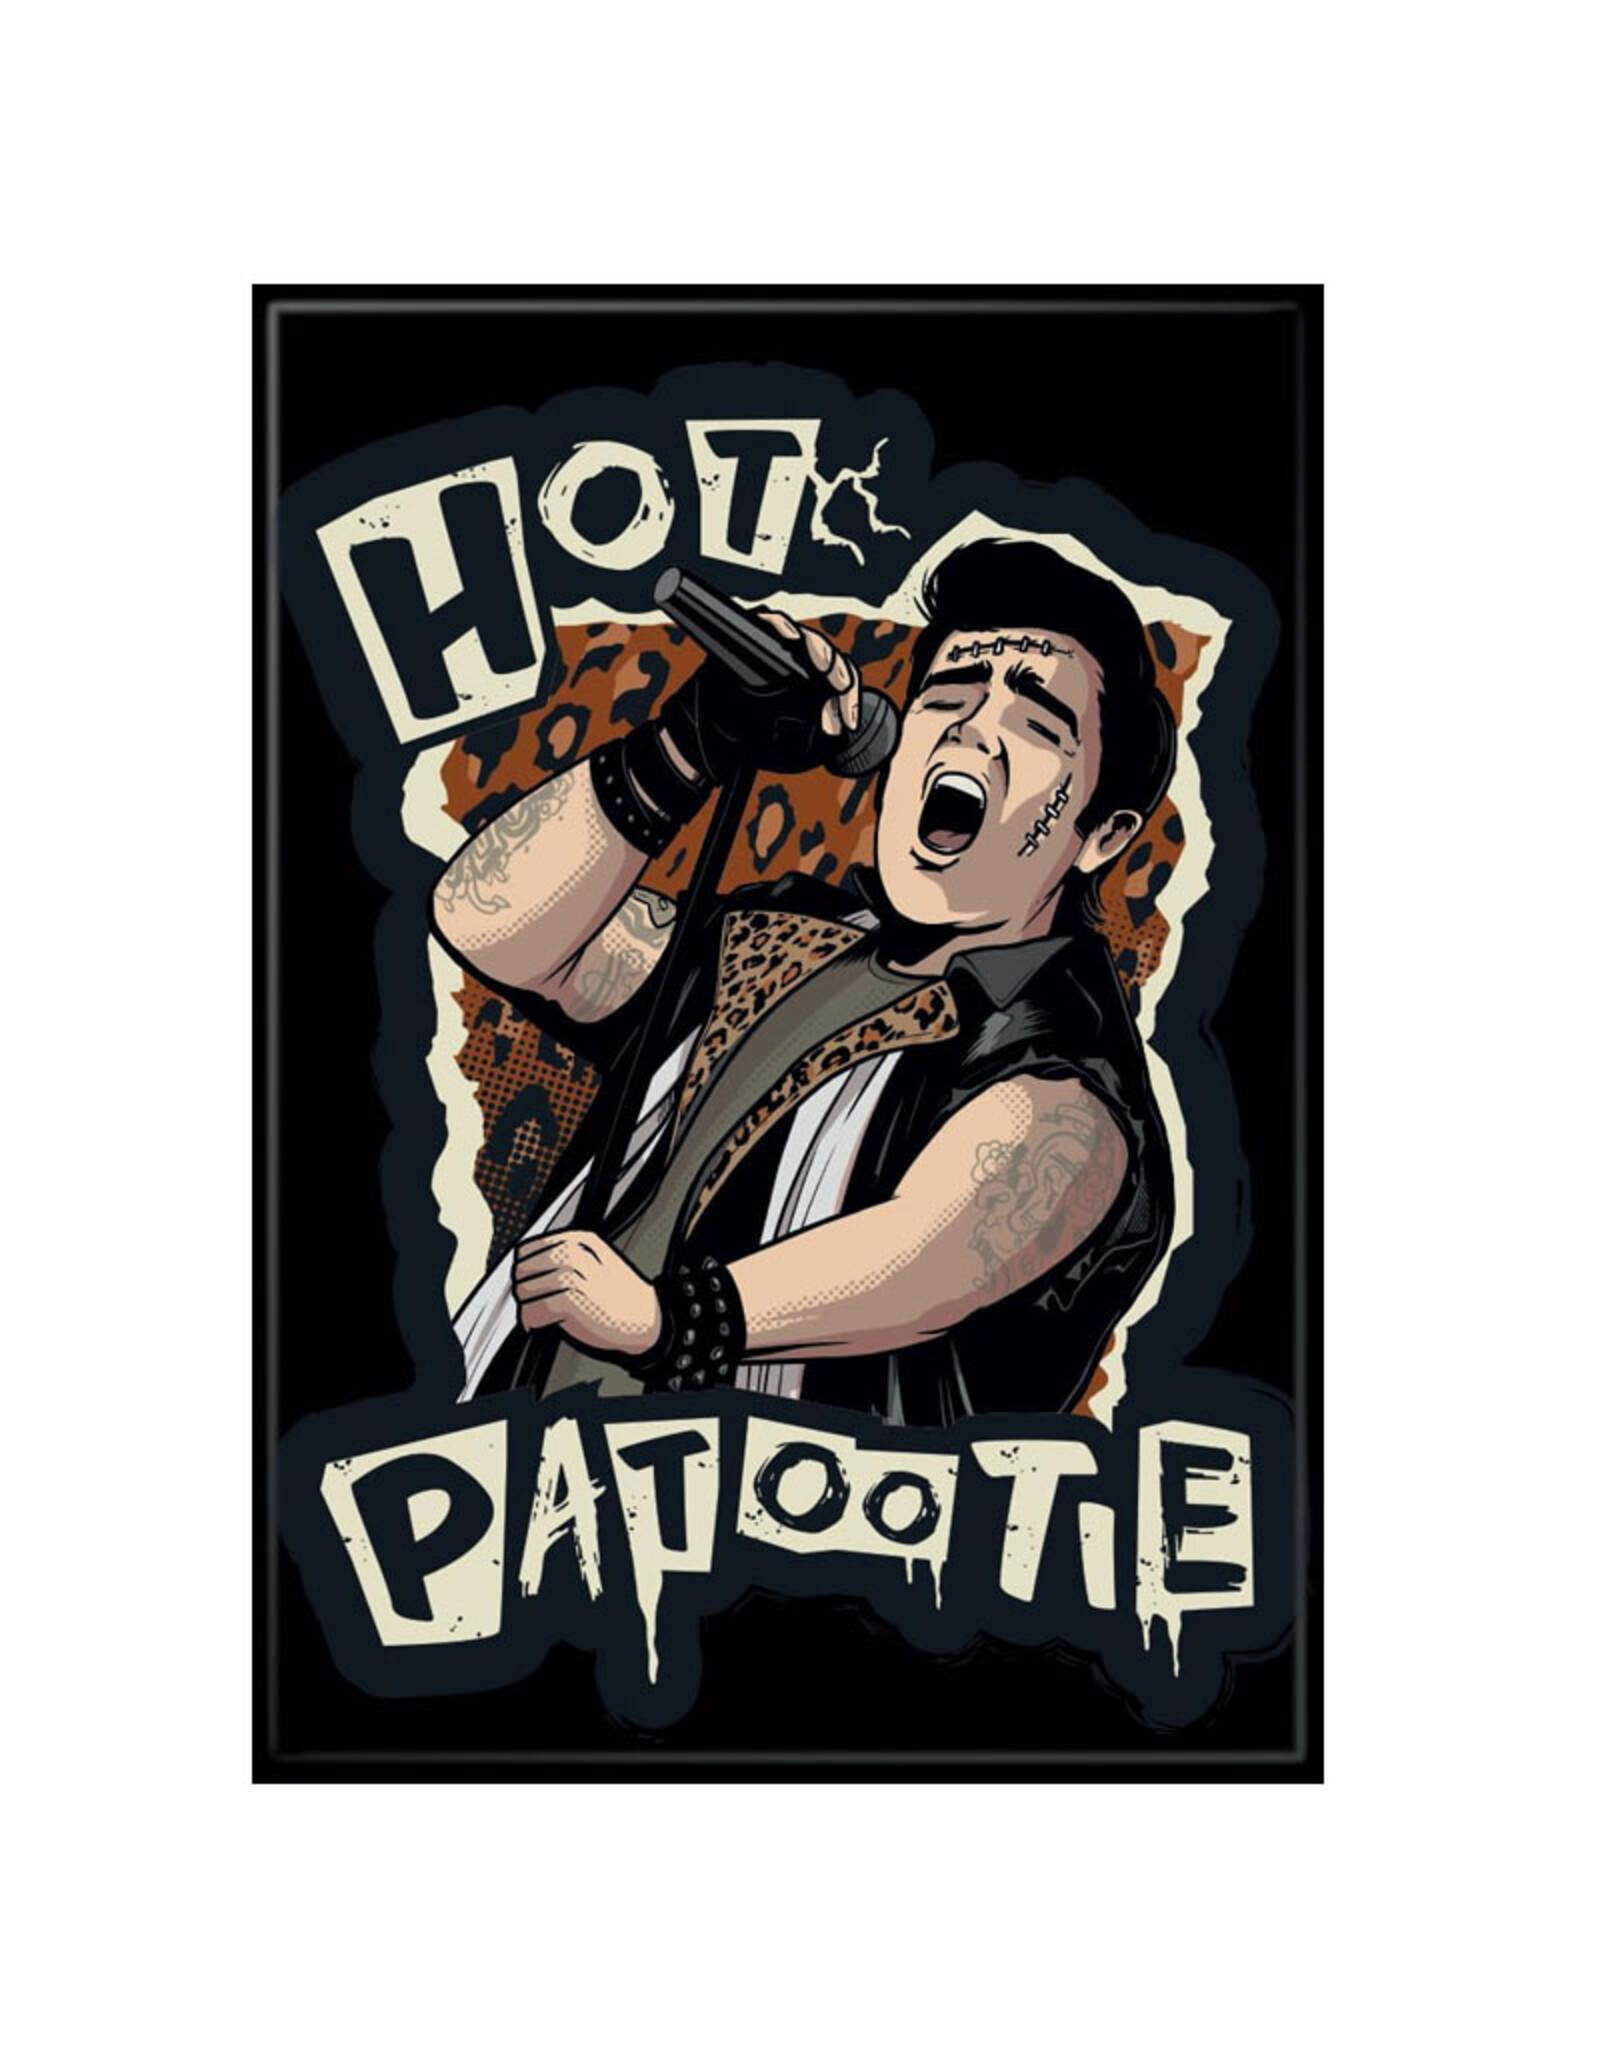 Ata-Boy Rocky Horror Show Hot Patootie Magnet